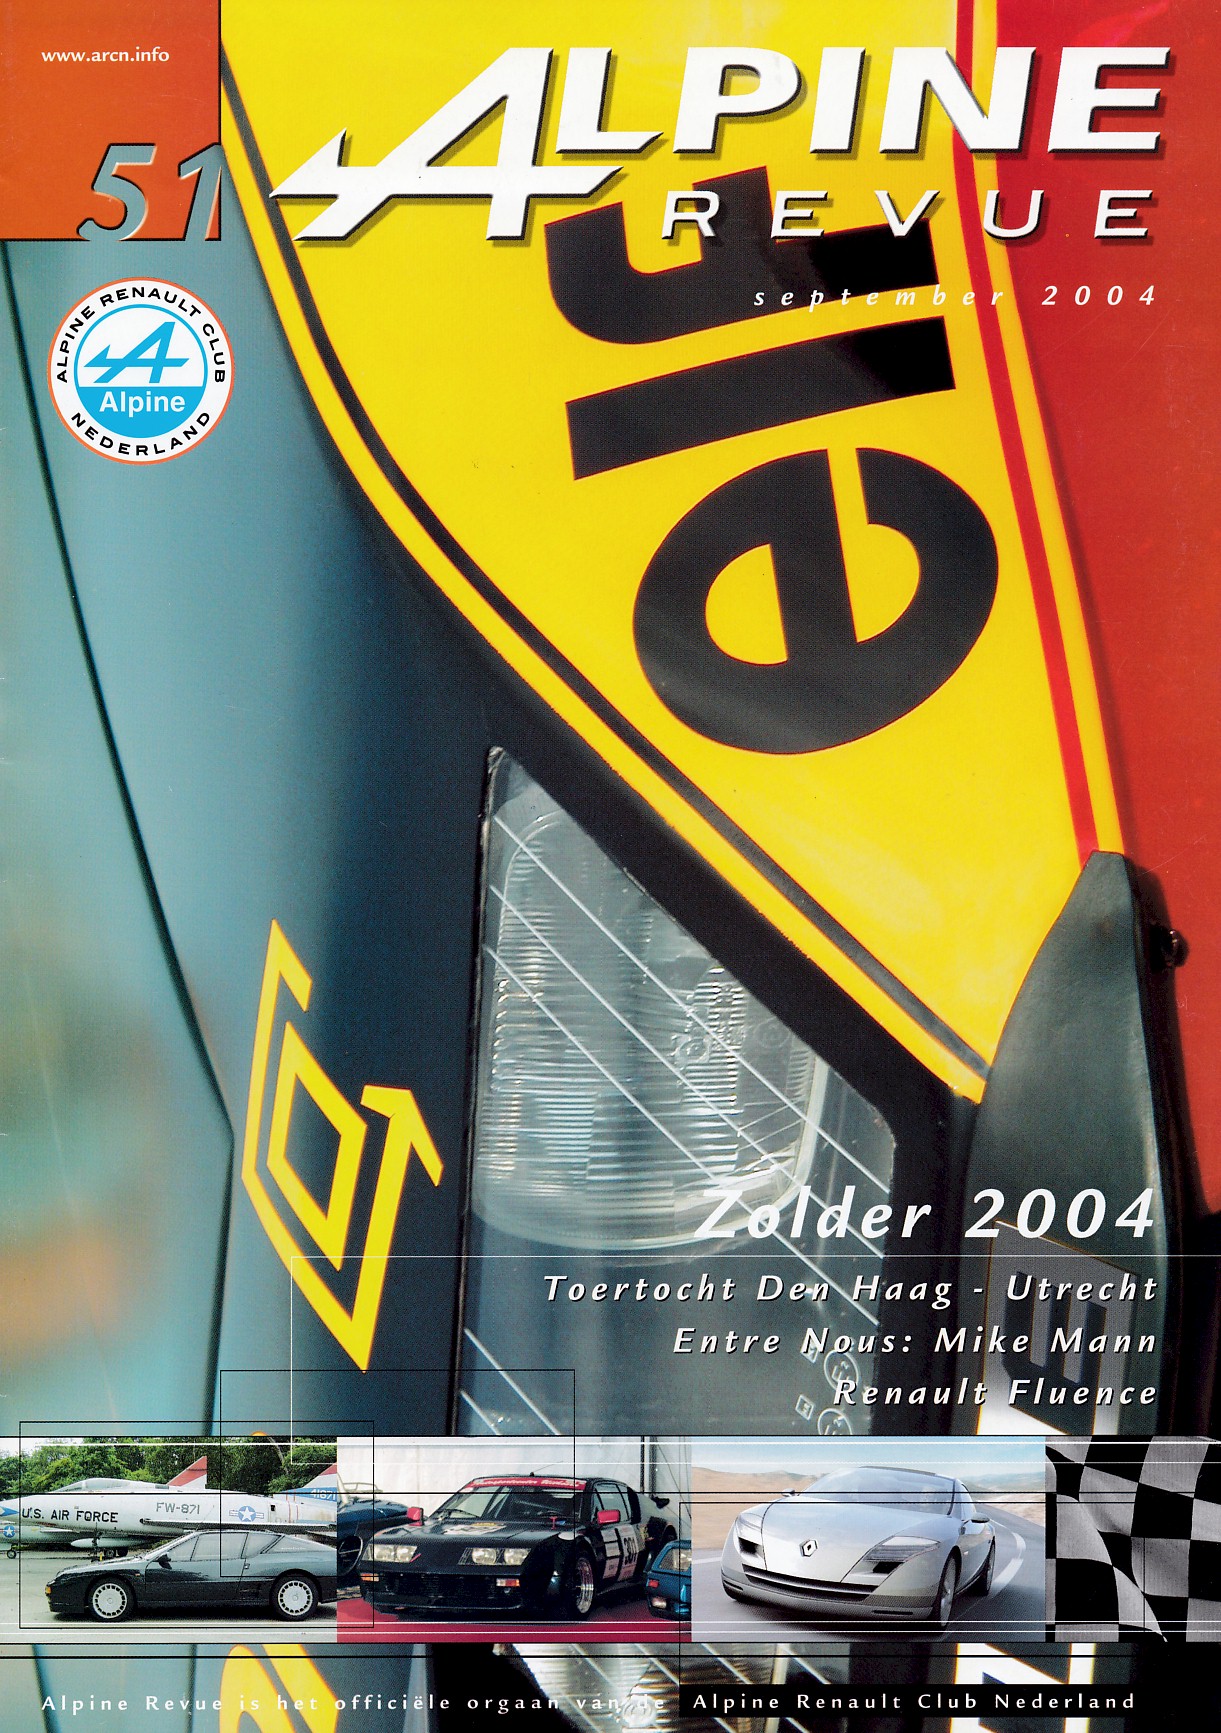 Revue, Alpine - Clubblad van de ARCN (Alpine Renault Club Nederland), nummer-51, september 2004